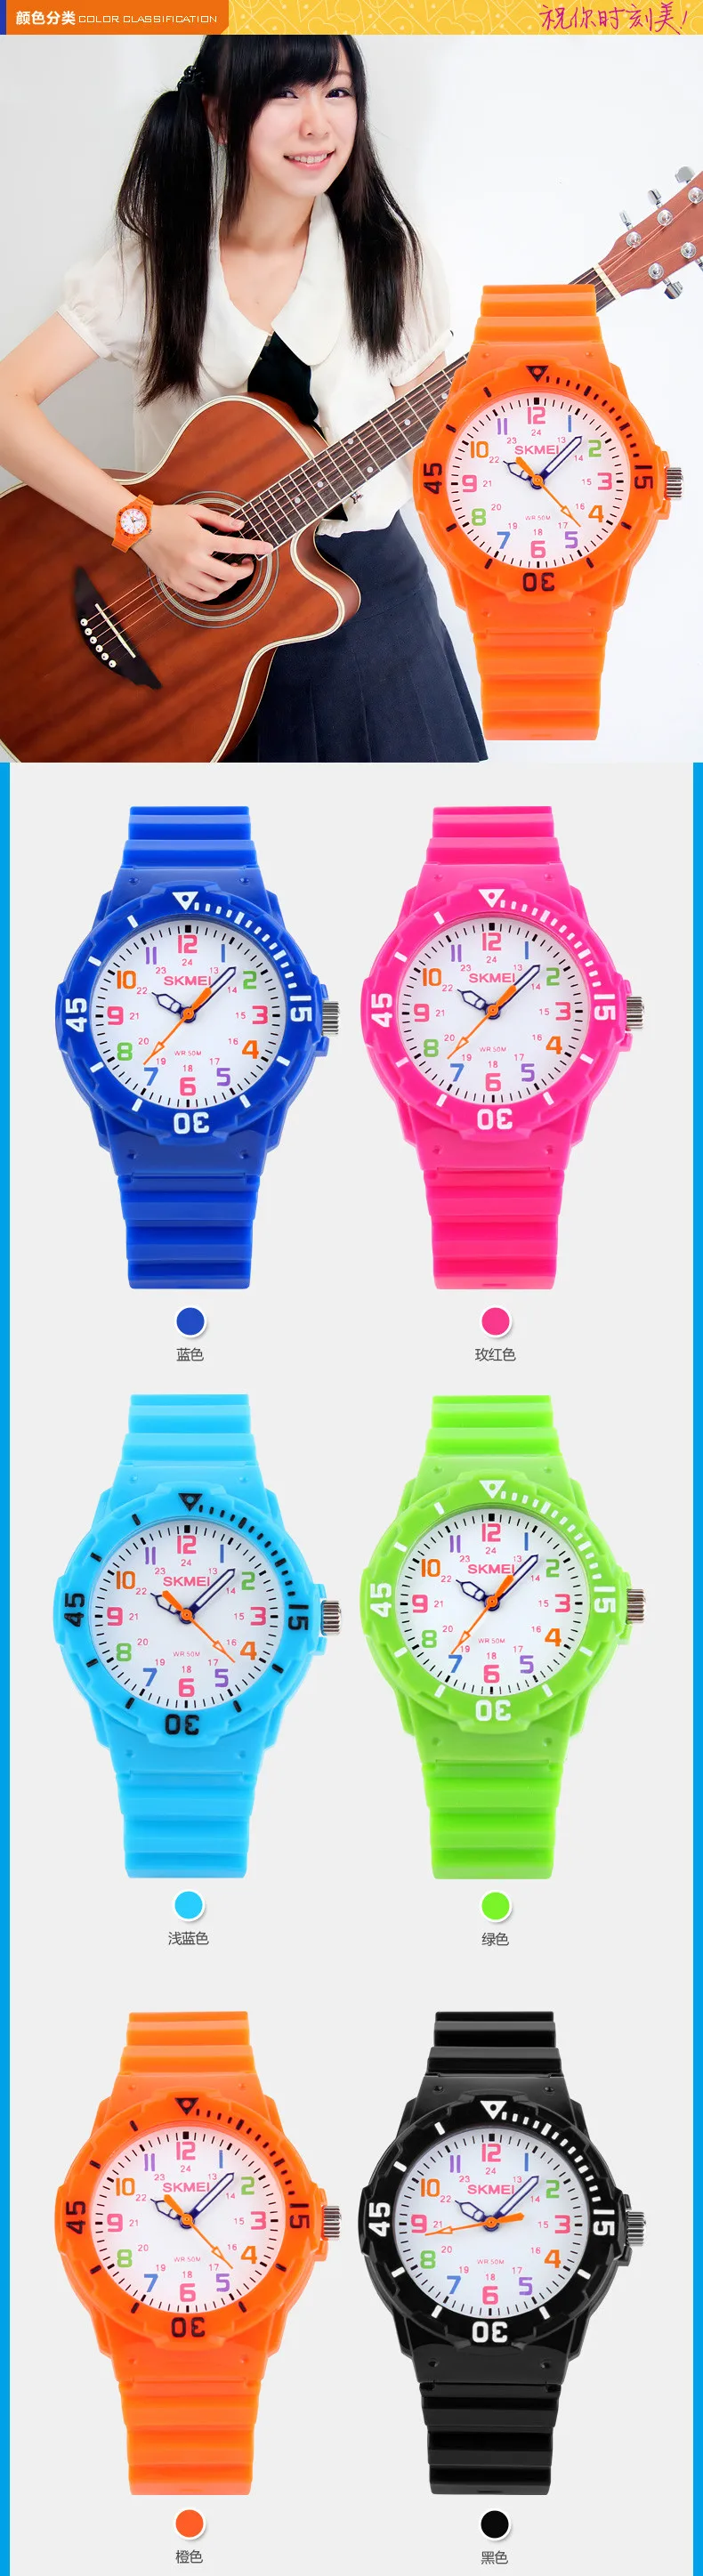 Skmei 1043 Children Watch Fashion Waterproof Jelly Kids Christmas gift boys girls Students Wristwatch